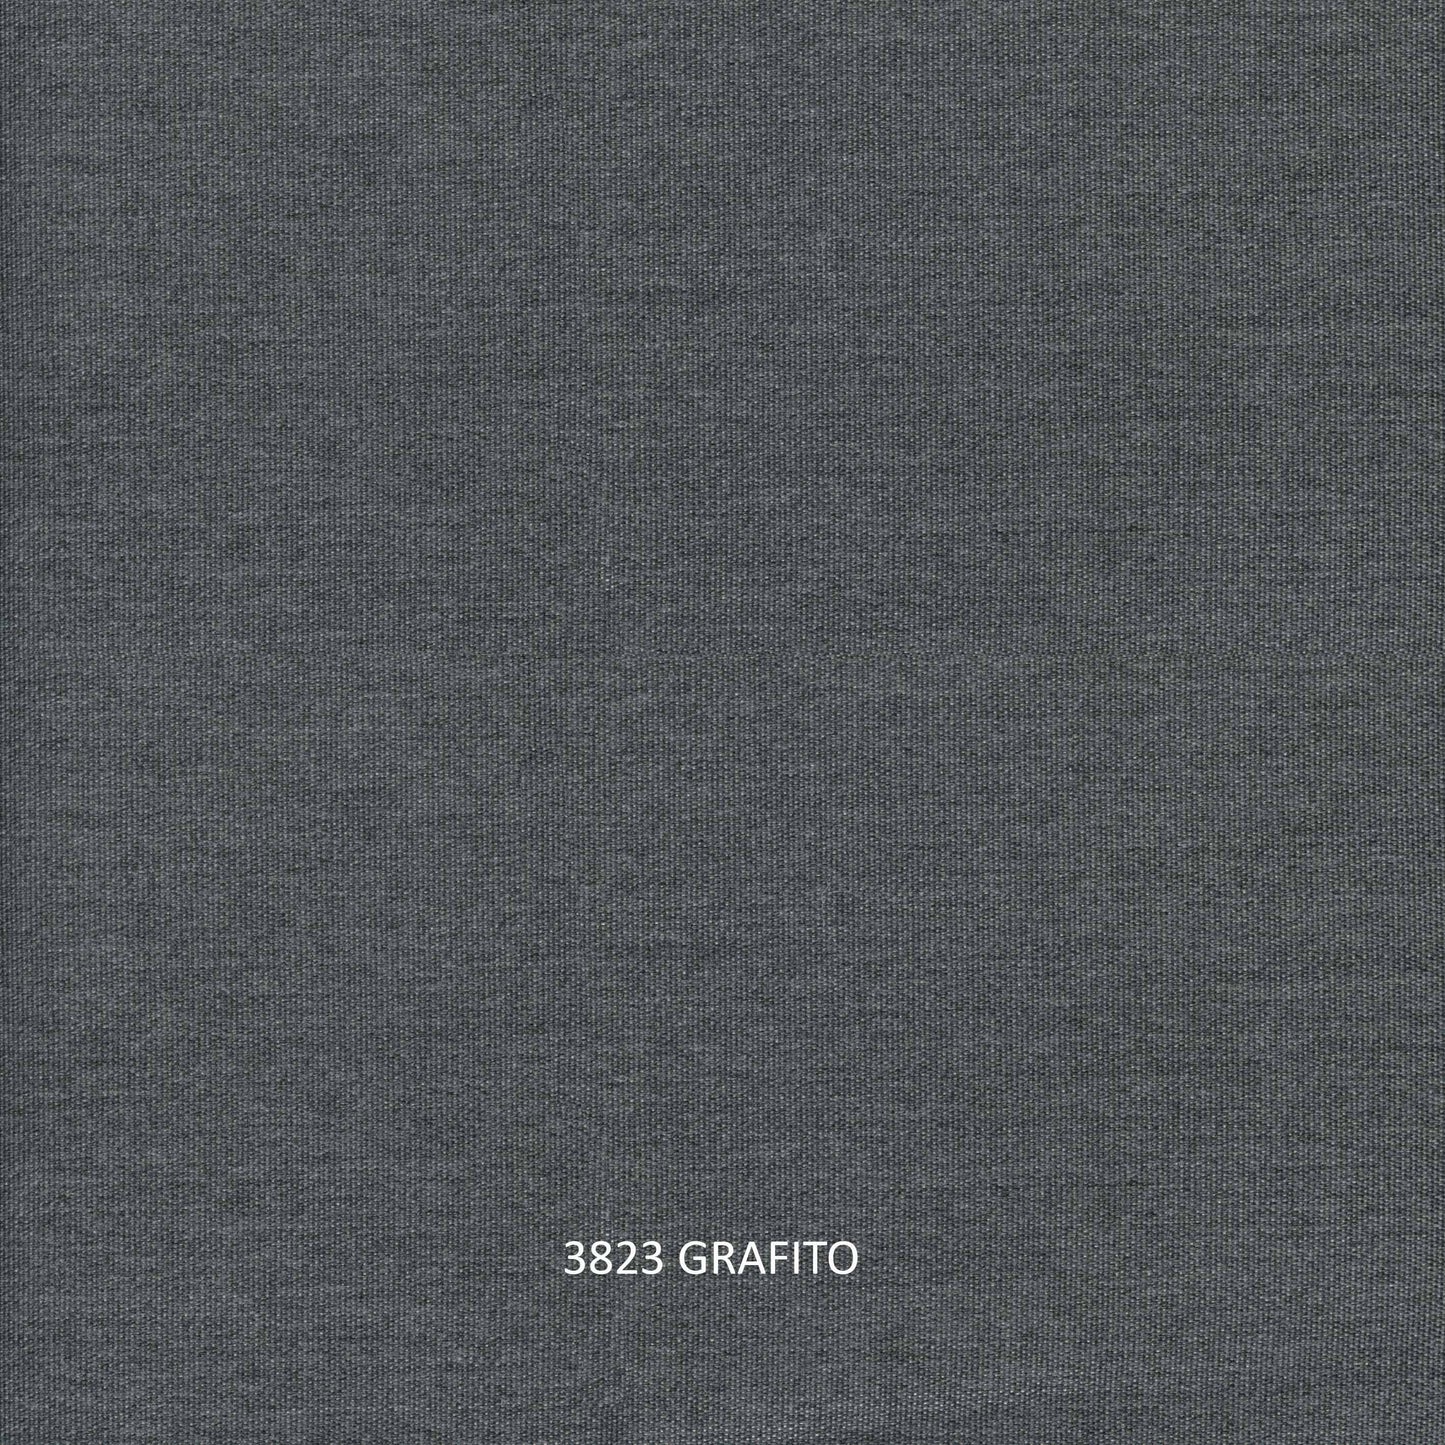 Ona Love Seat - PadioLiving - Ona Love Seat - Outdoor Love Seat - Dark Grey 21mm Strap / Metal-Grafito(£3626) - PadioLiving